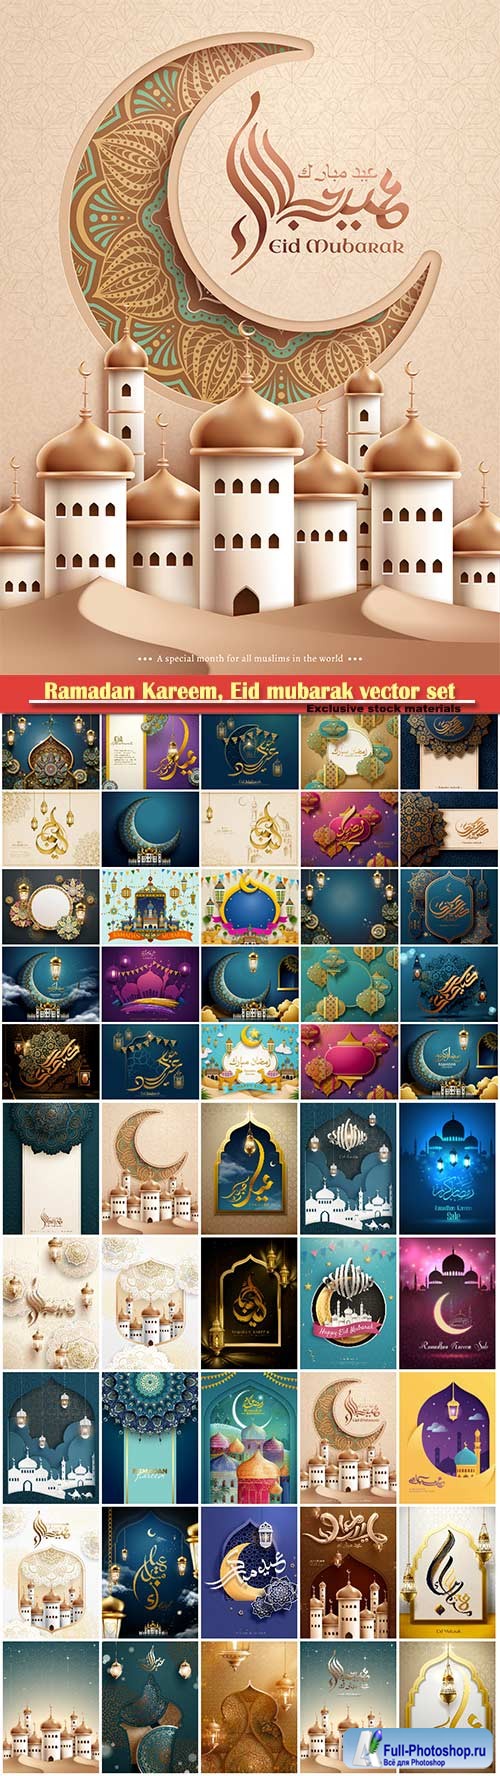 Ramadan Kareem, Eid mubarak vector set # 2